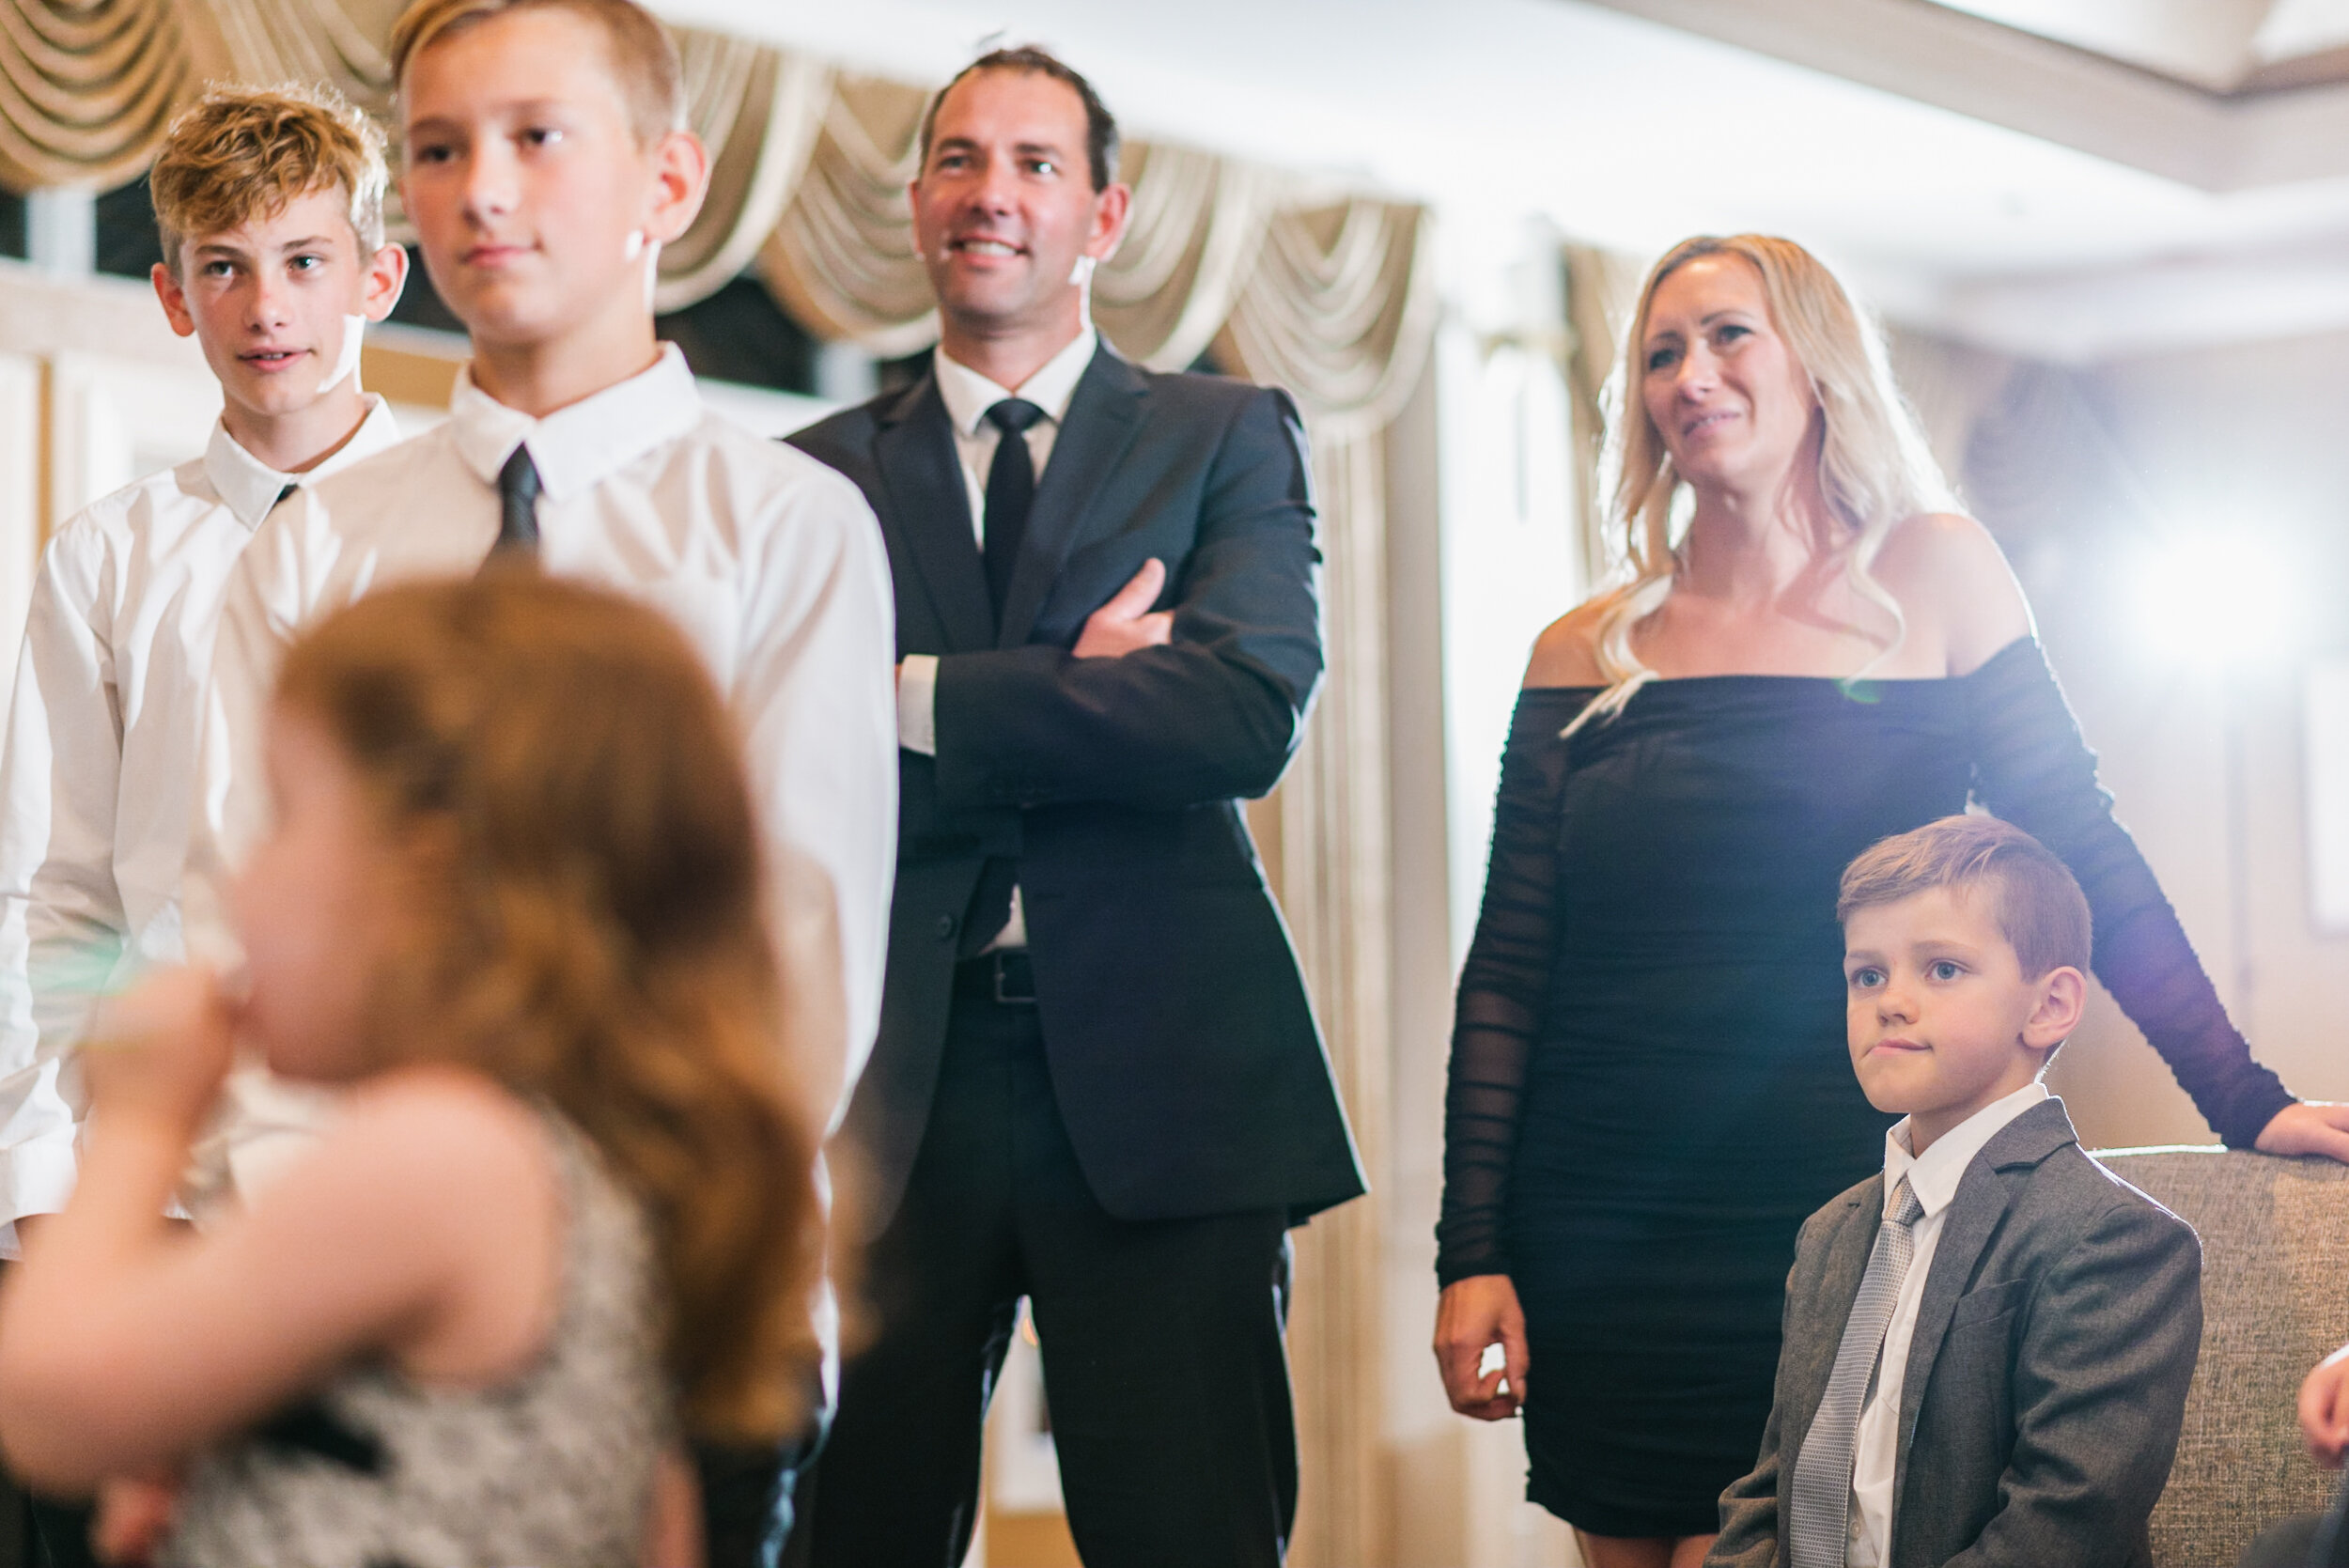 Wedding guests at reception